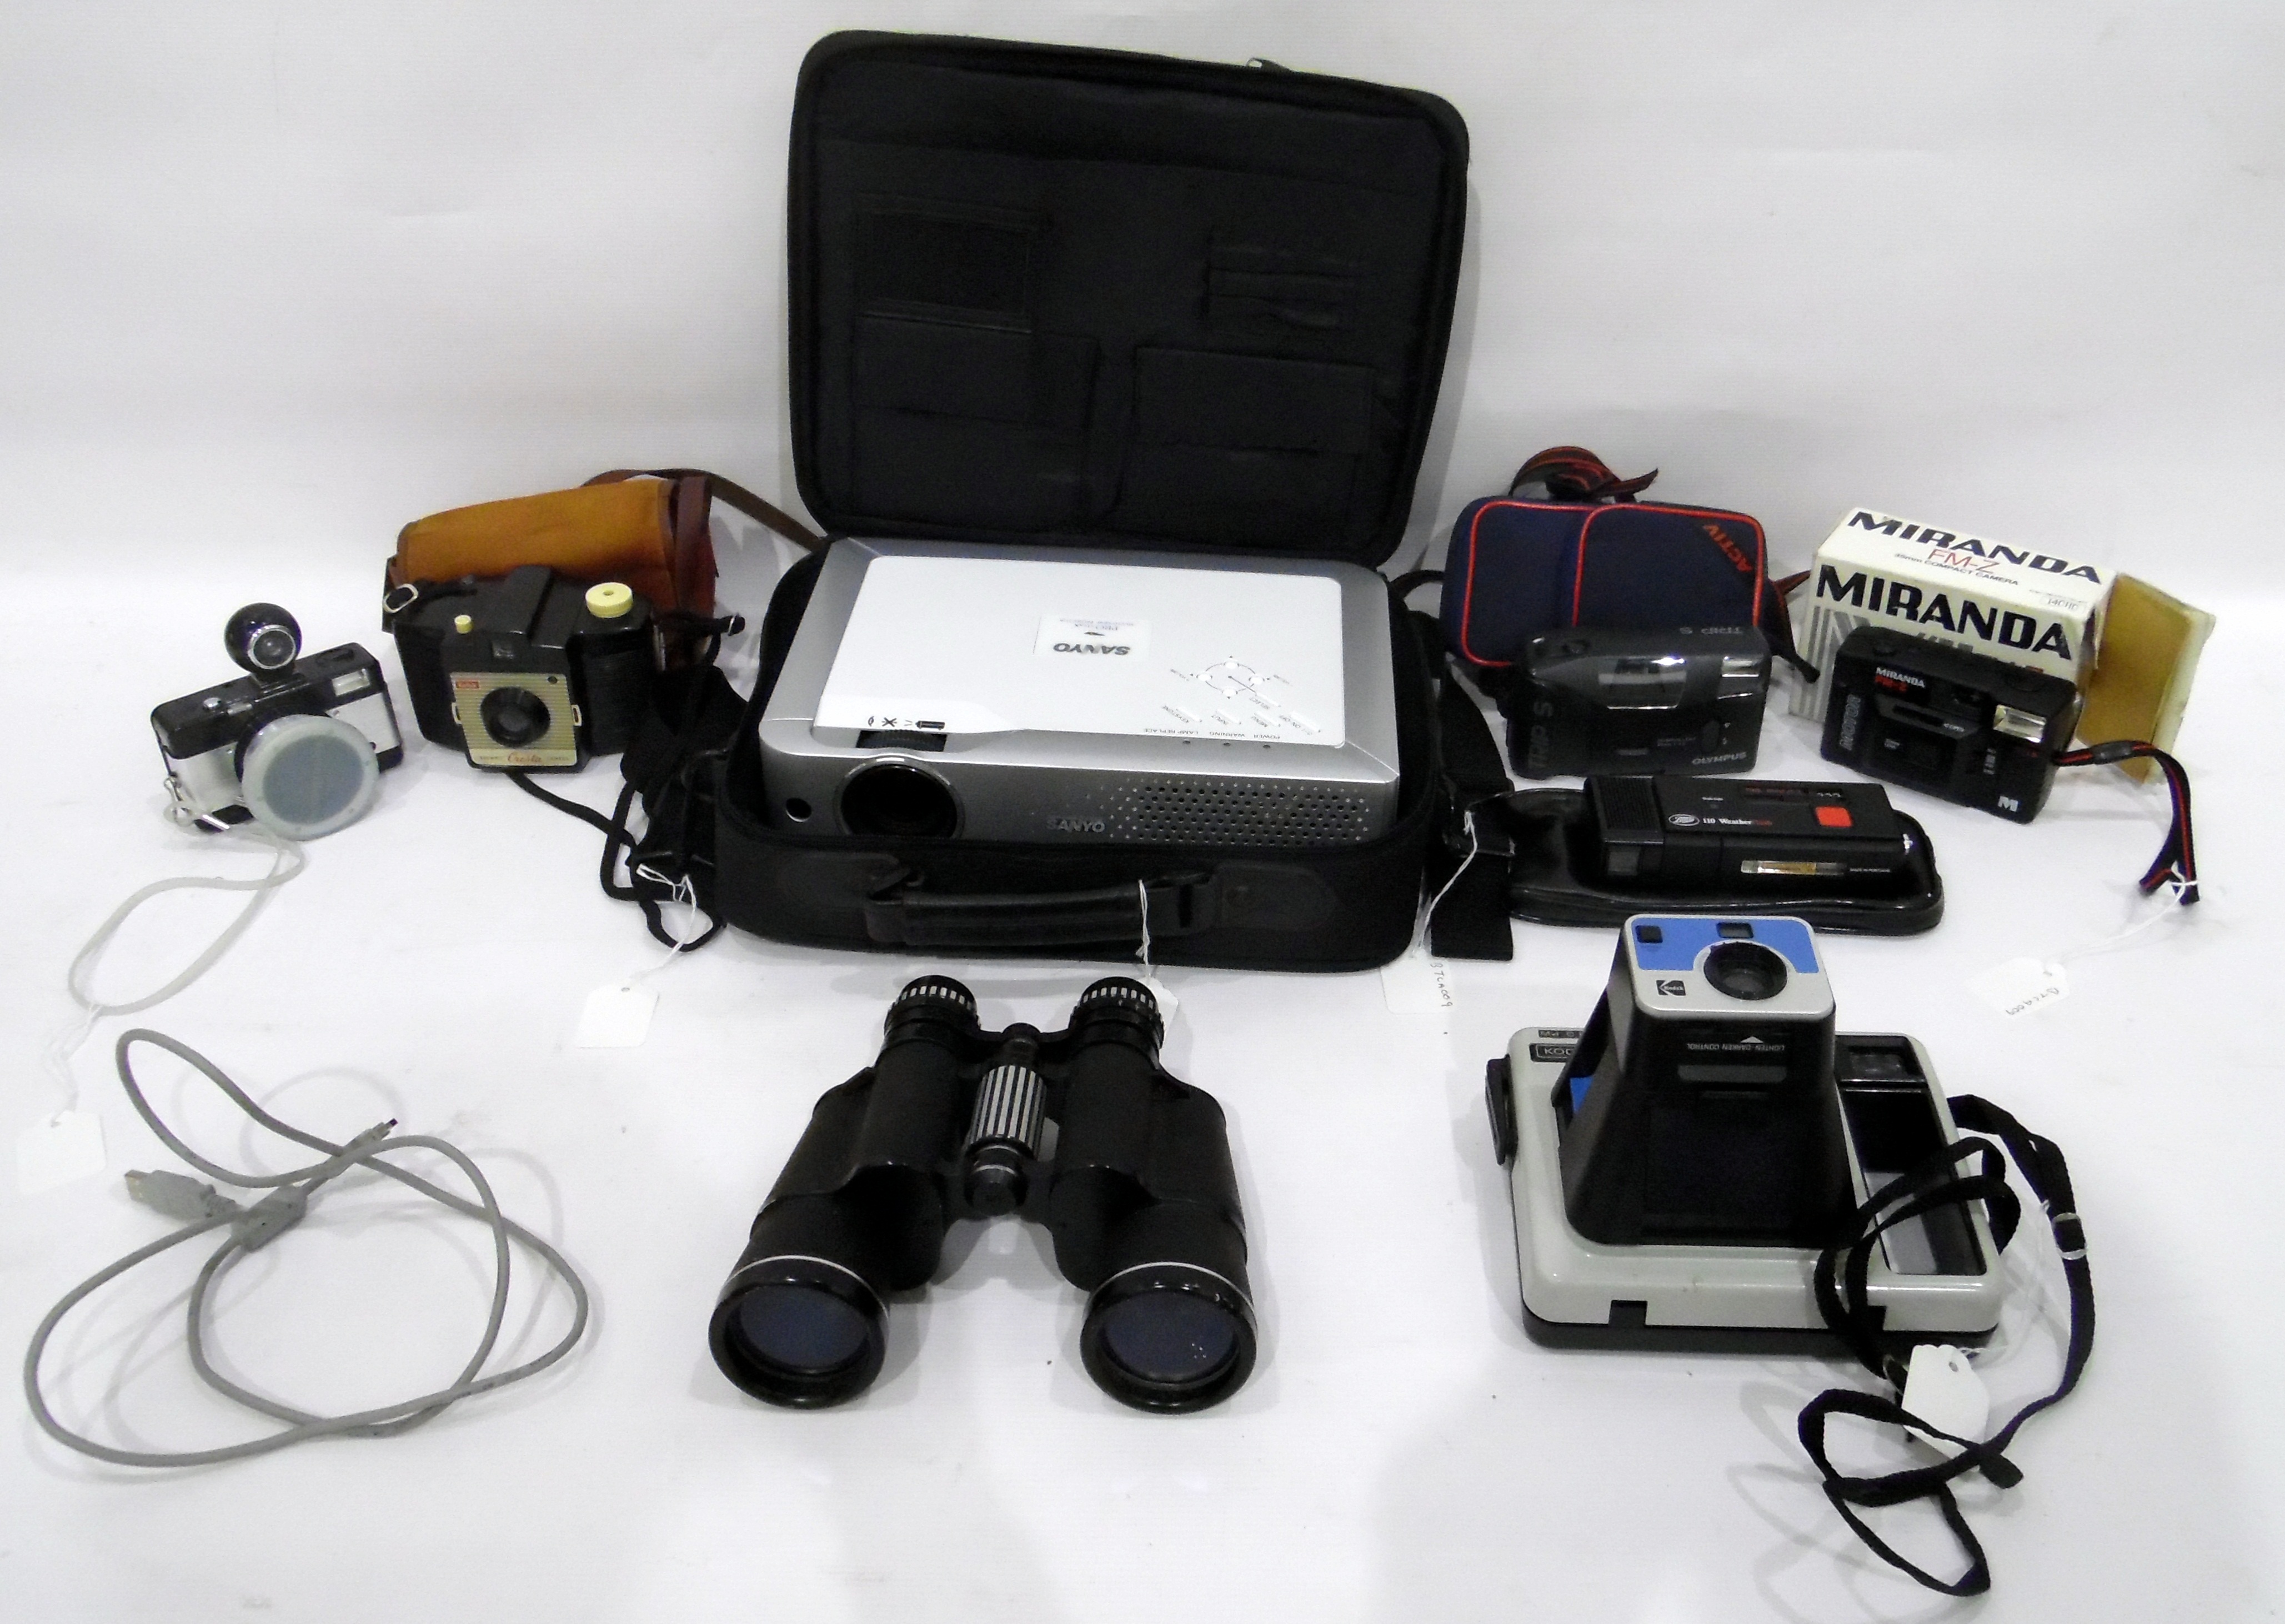 Sanyo projector, various cameras and binoculars, - Image 2 of 3